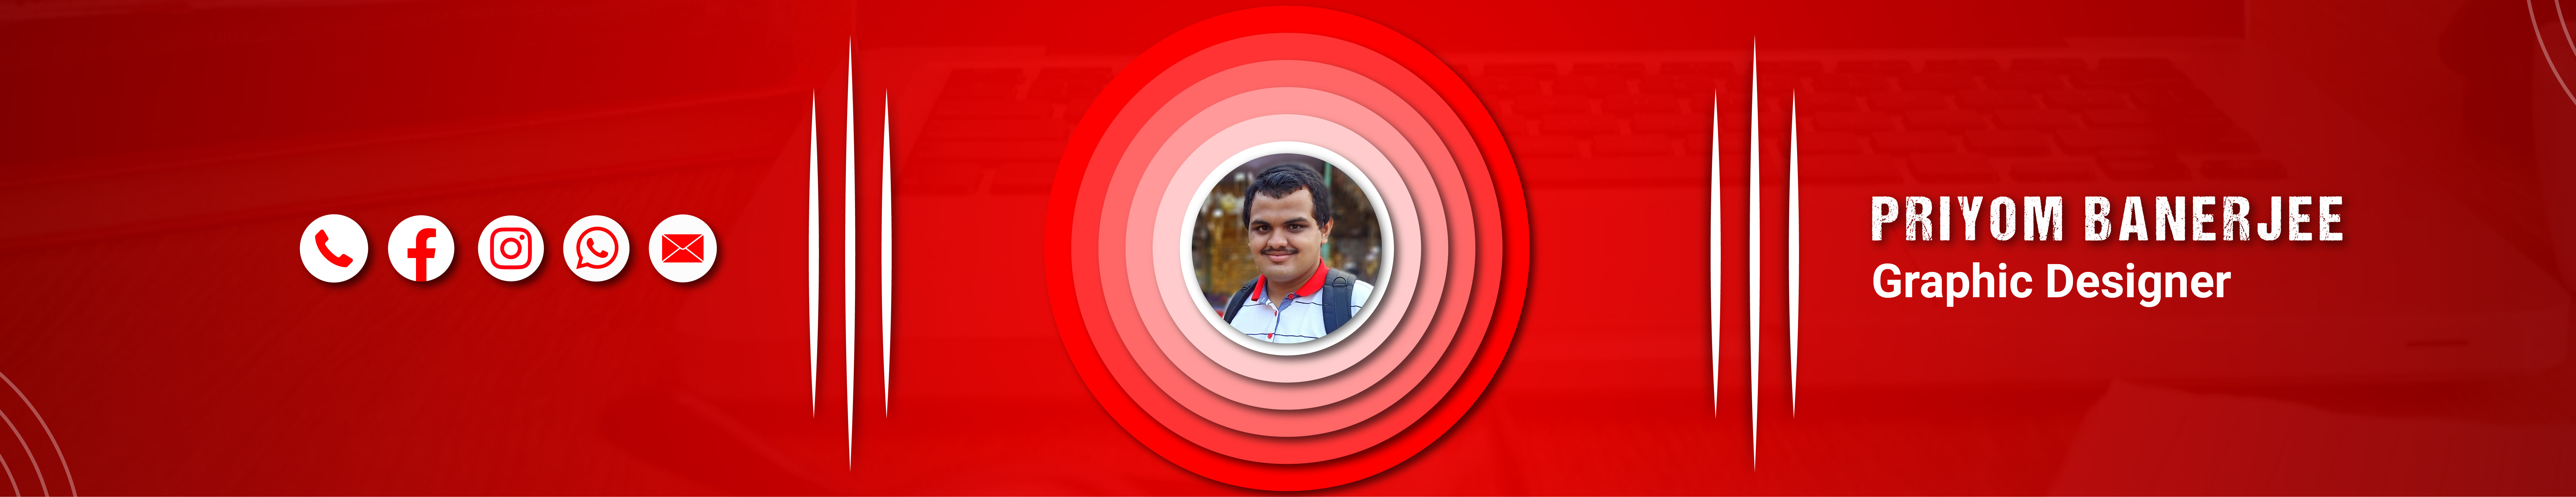 Priyom Banerjee's profile banner